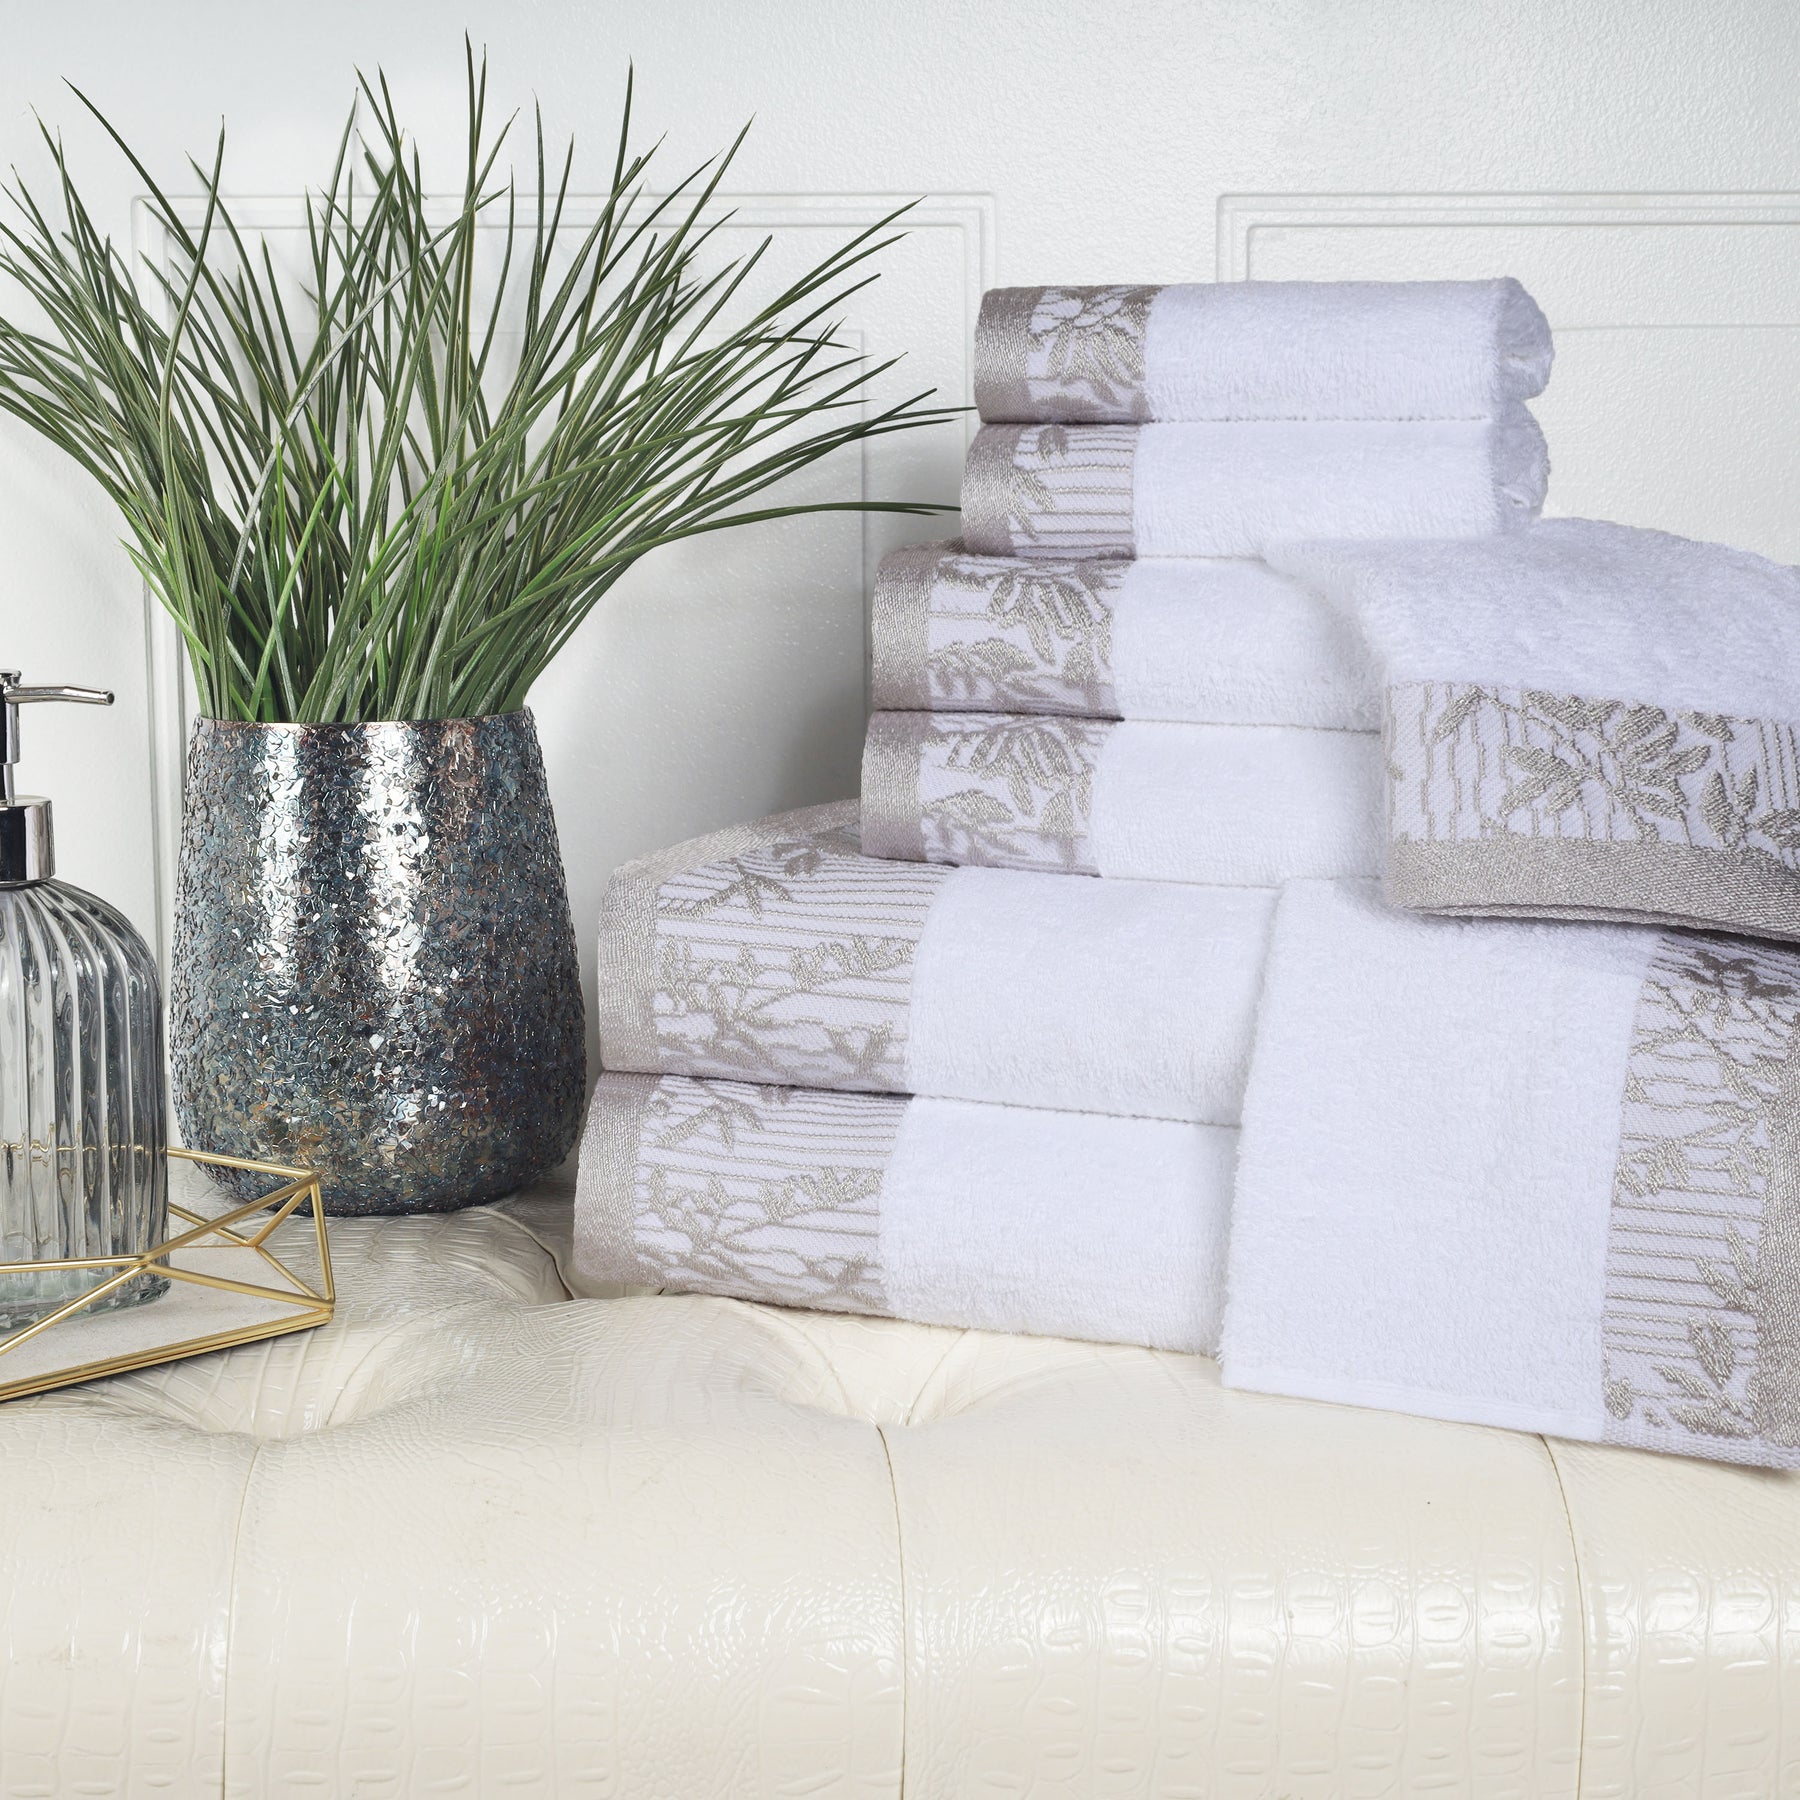 Superior Wisteria Cotton Floral Jacquard 8 Piece Towel Set - White